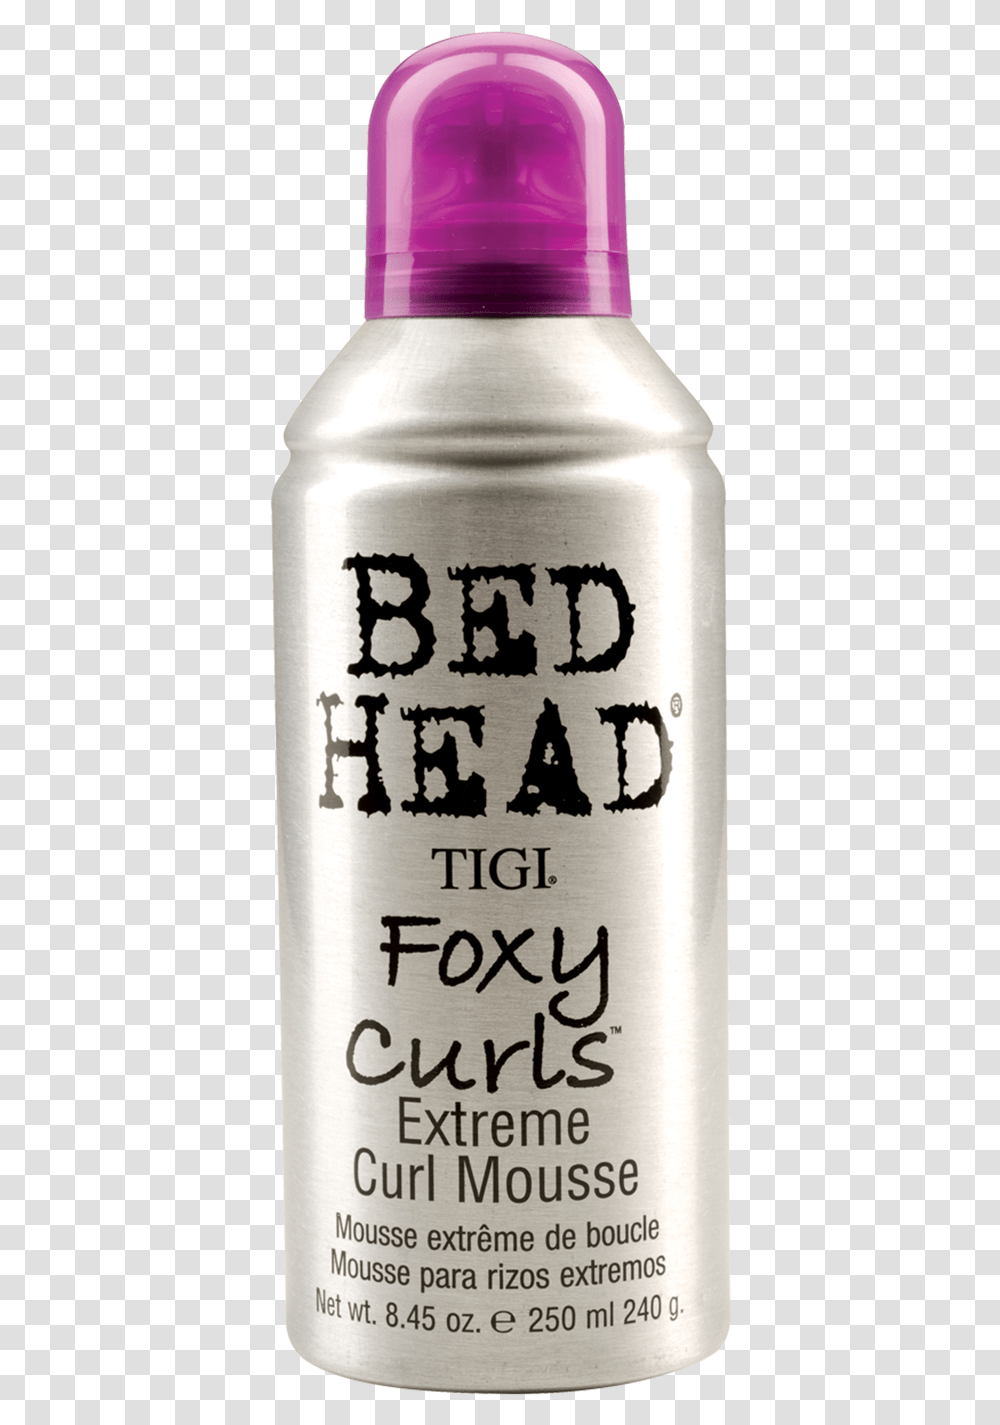 Foxy Curls Extreme Curl Mousse 6 Voc Tigi Cosmoprof Water Bottle, Tin, Can, Beverage, Drink Transparent Png